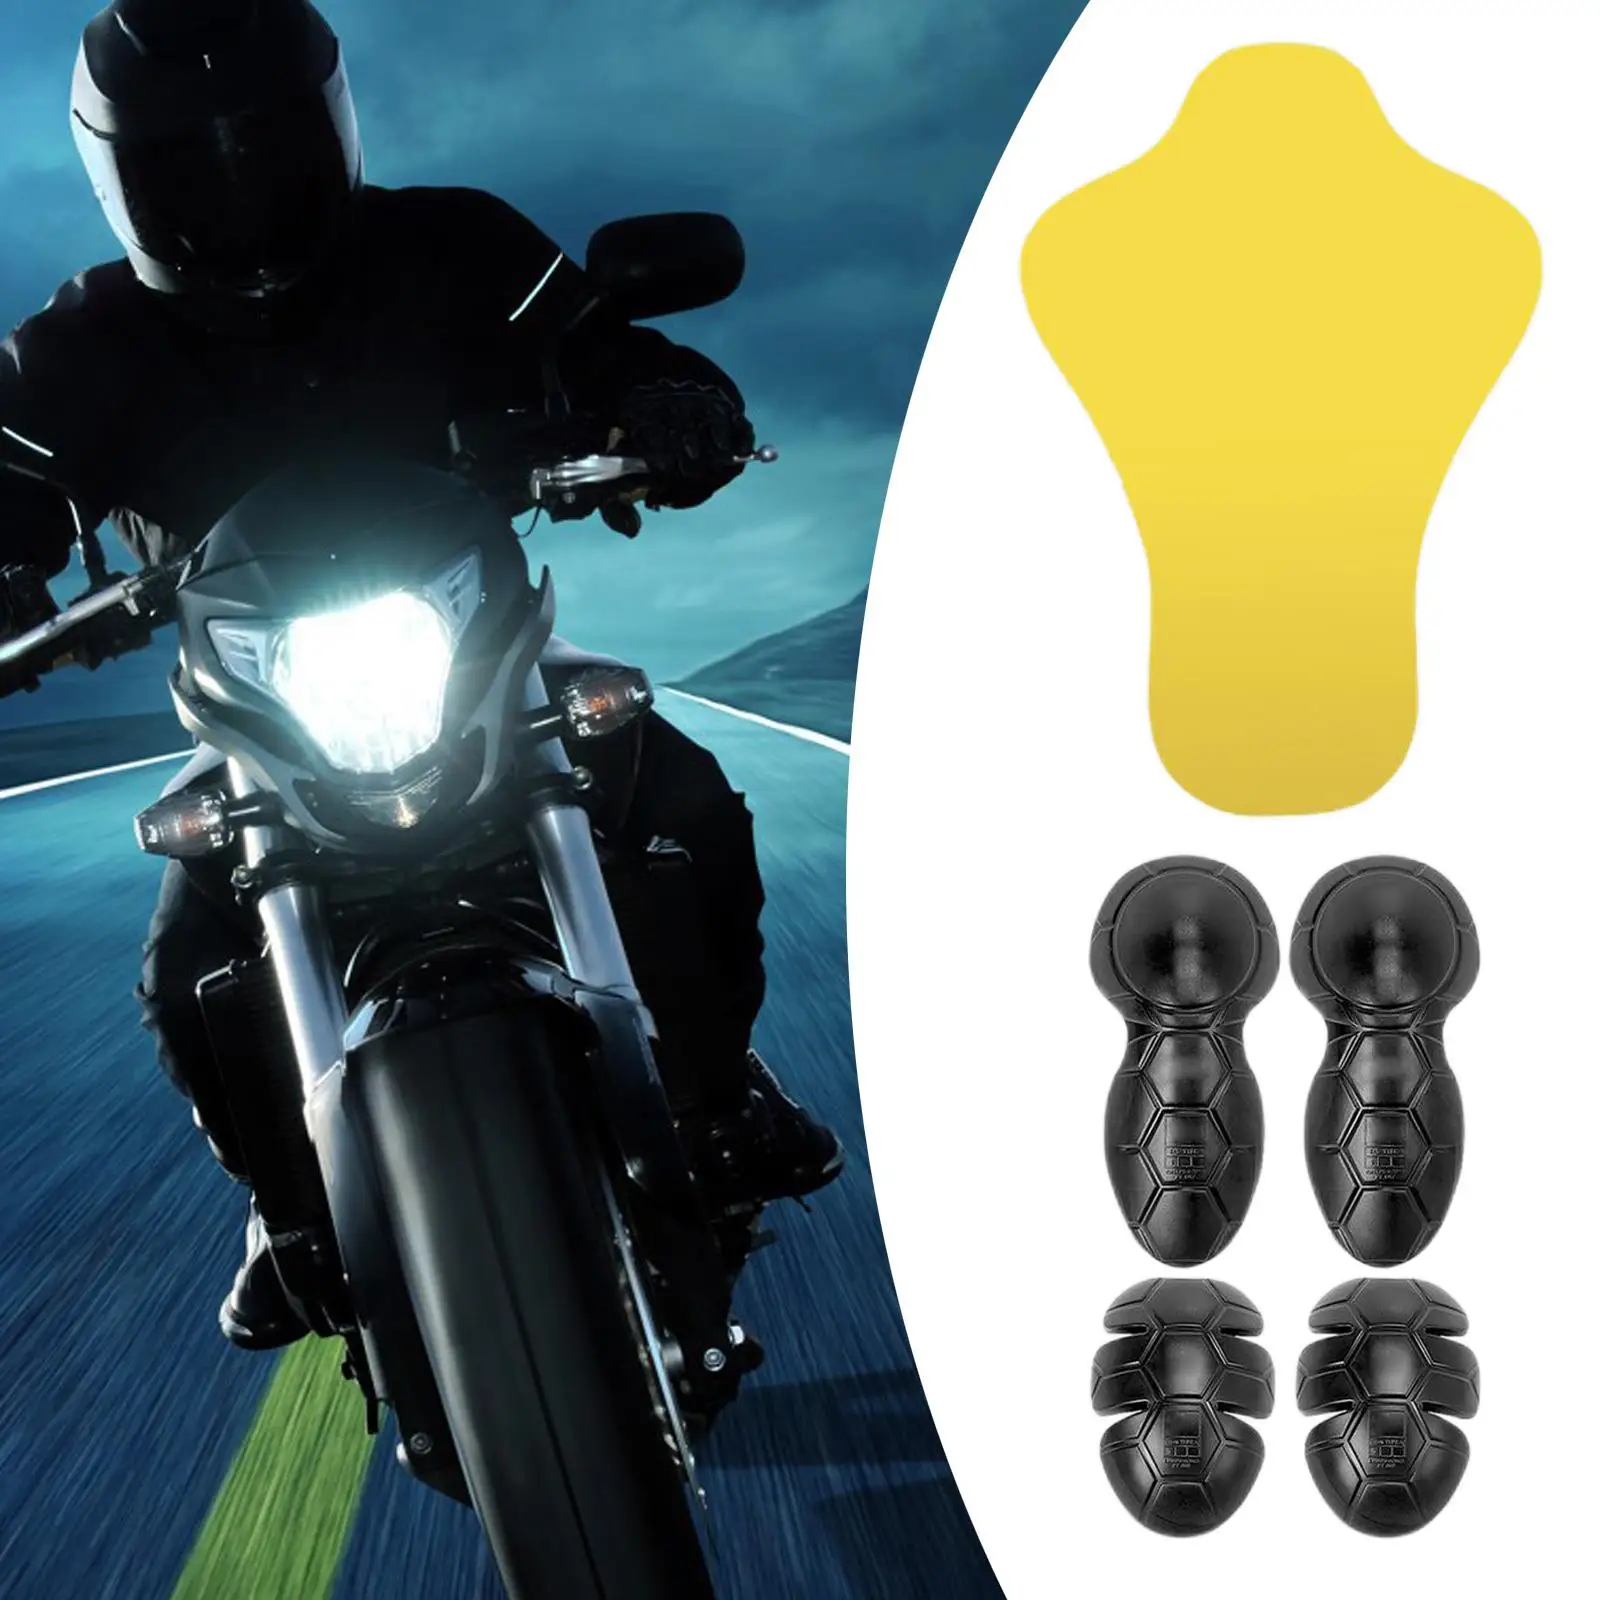 5x Motorcycle Jacket Insert Armor Protectors Set Motorcycle Accessories Motorcycle Biker Riding Motorcycle Biker Equipment